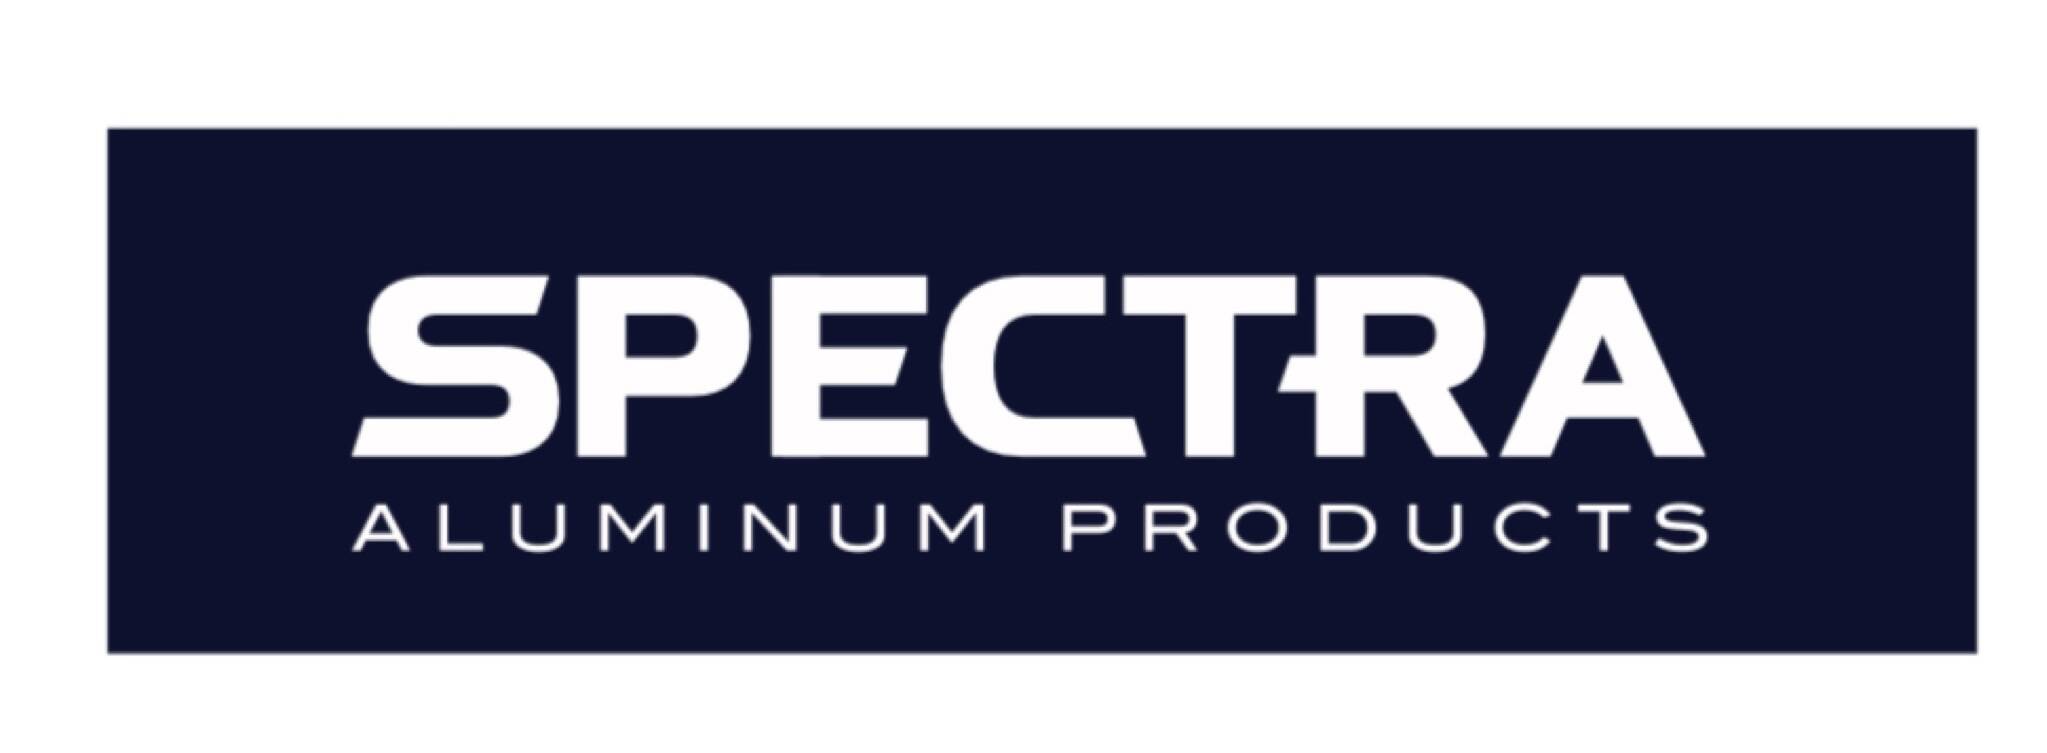 Spectra Aluminum Products